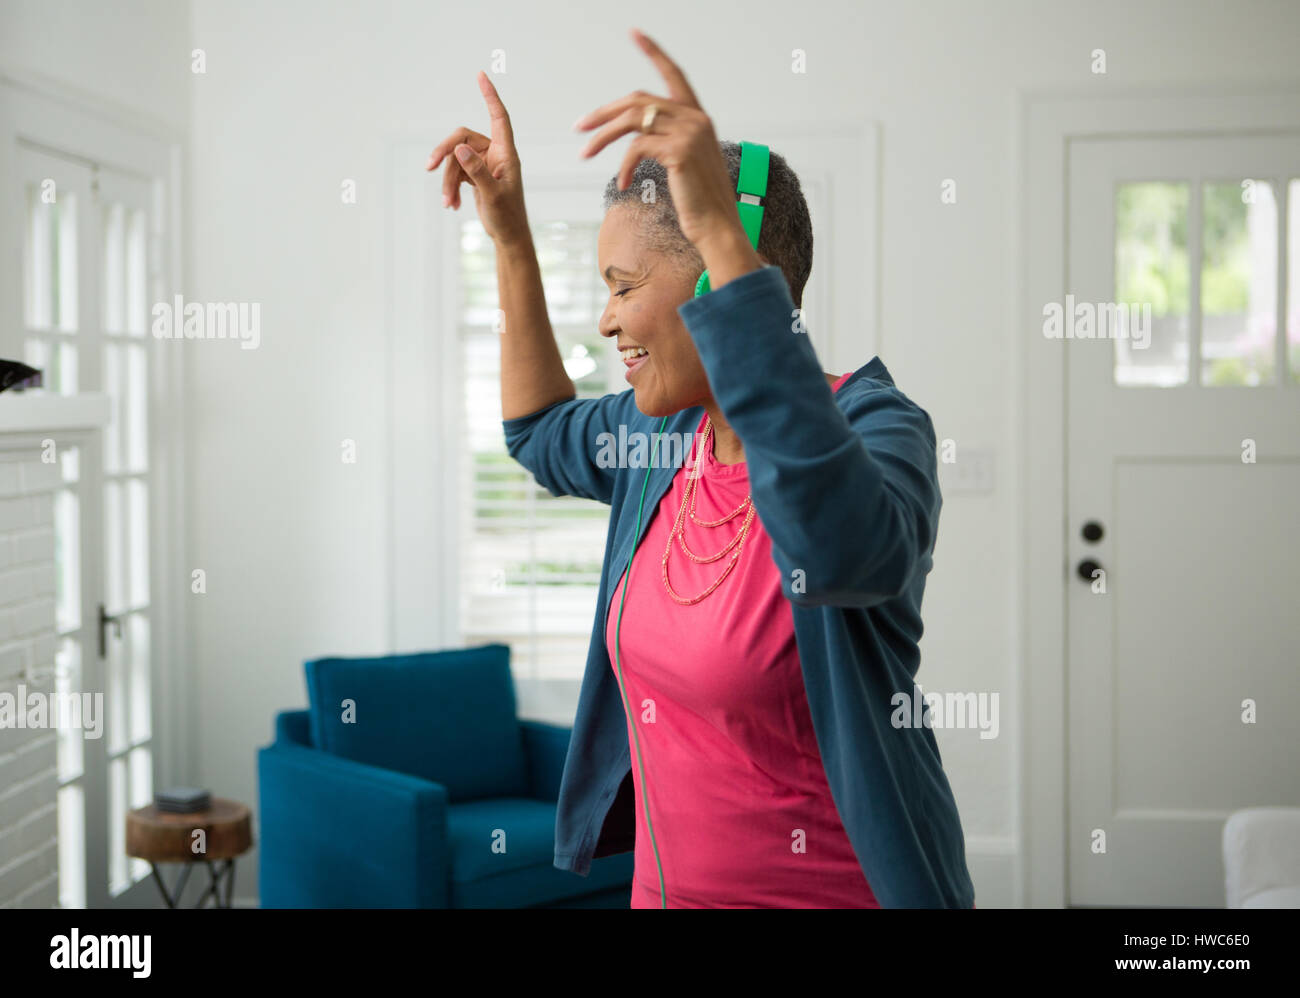 Senior woman listening to music on headphones Stock Photo